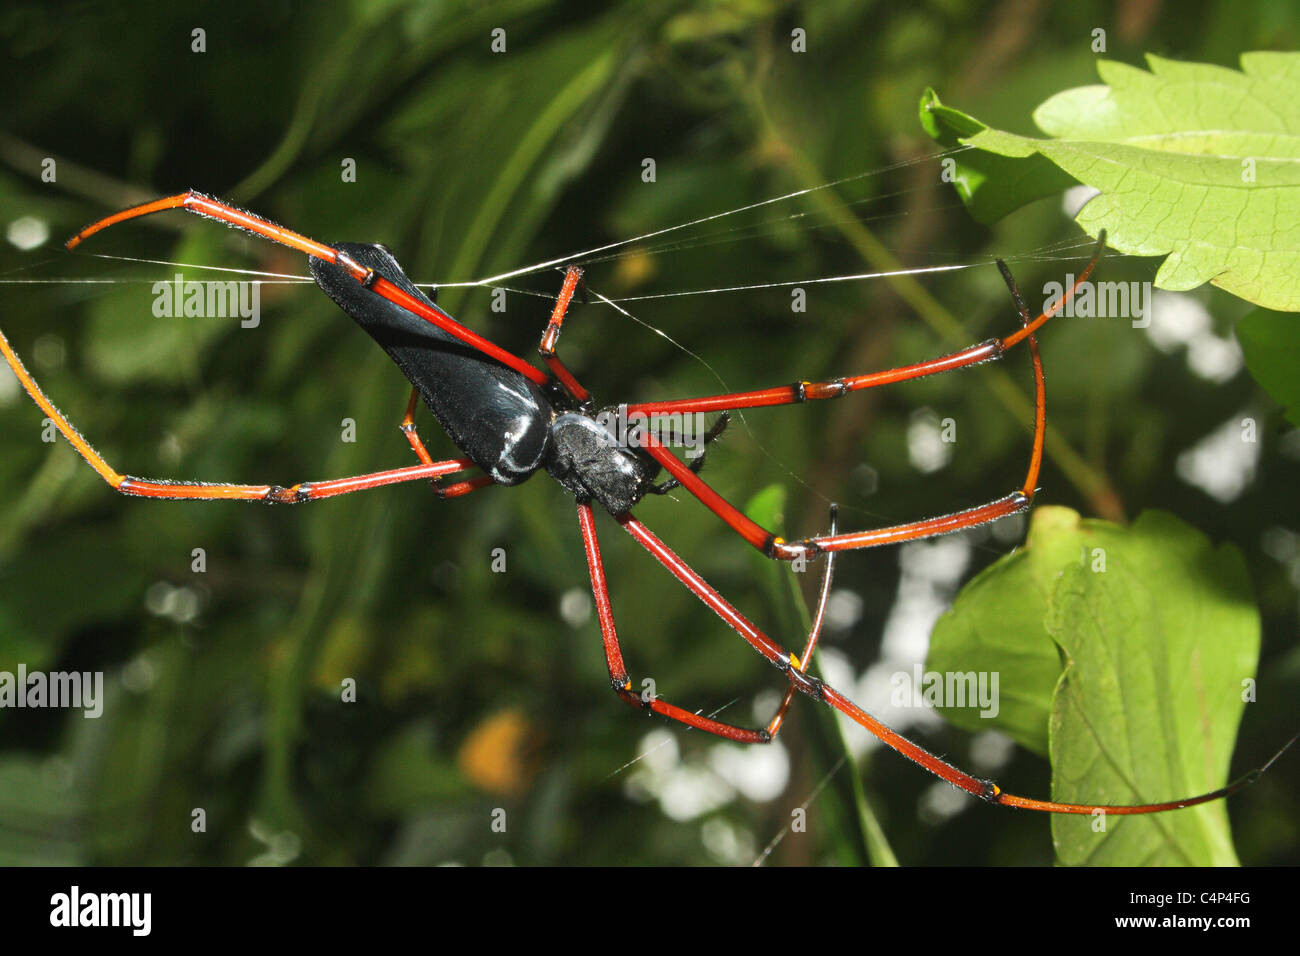 BLACK WOOD SPIDER Nephila kuhli Closeup Stock Photo